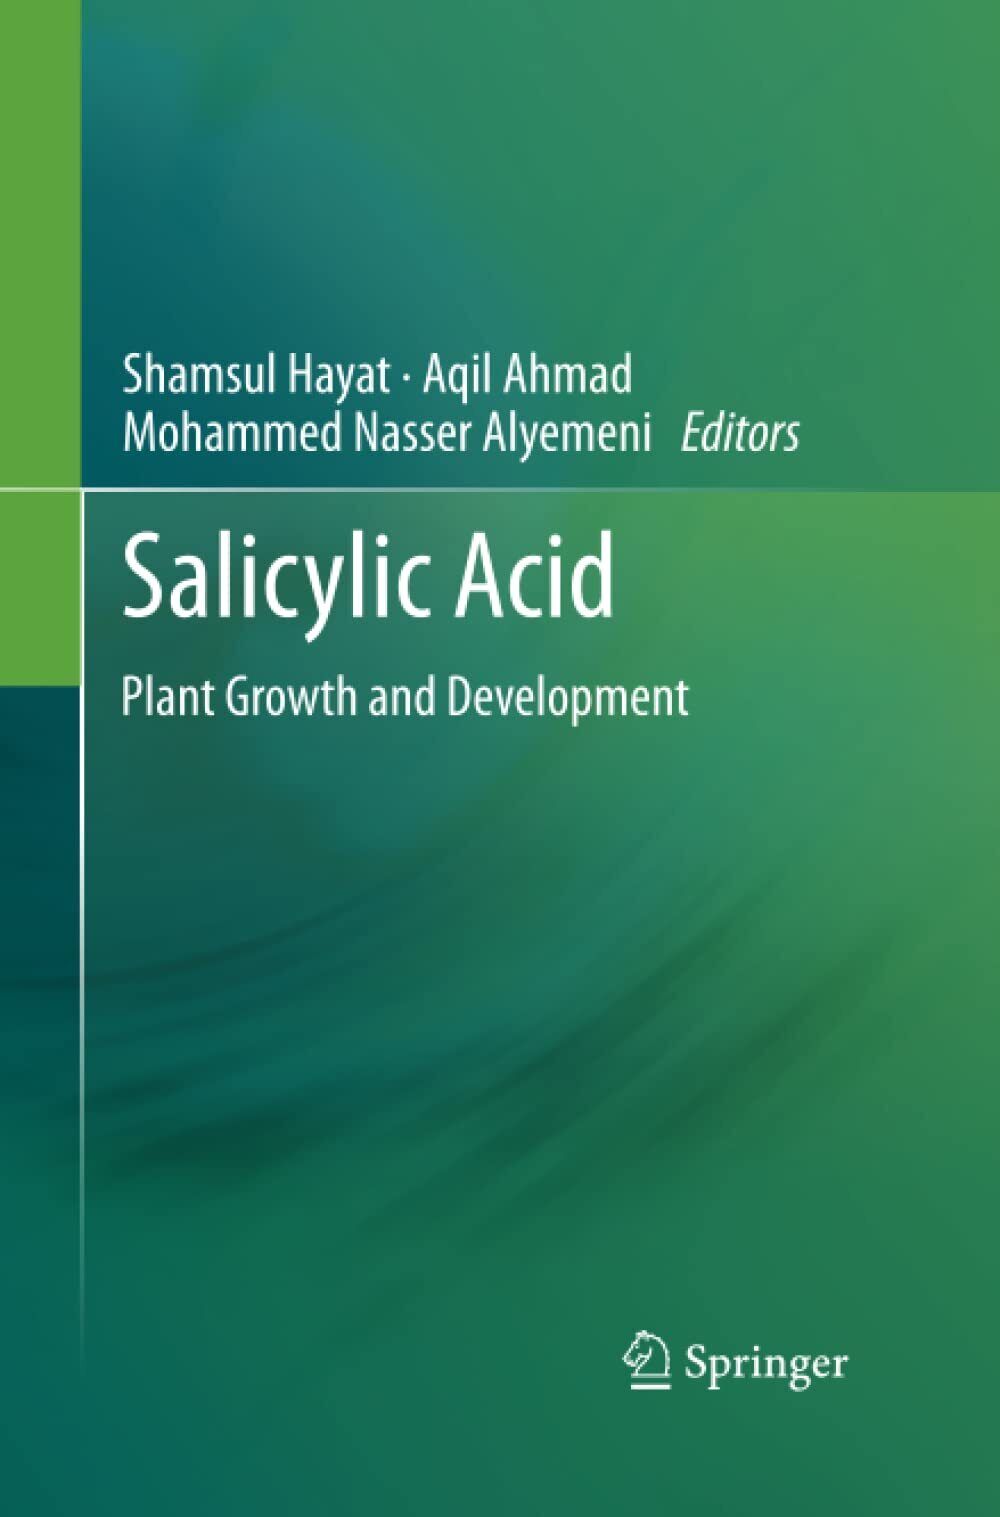 SALICYLIC ACID - Shamsul Hayat - Springer, 2015